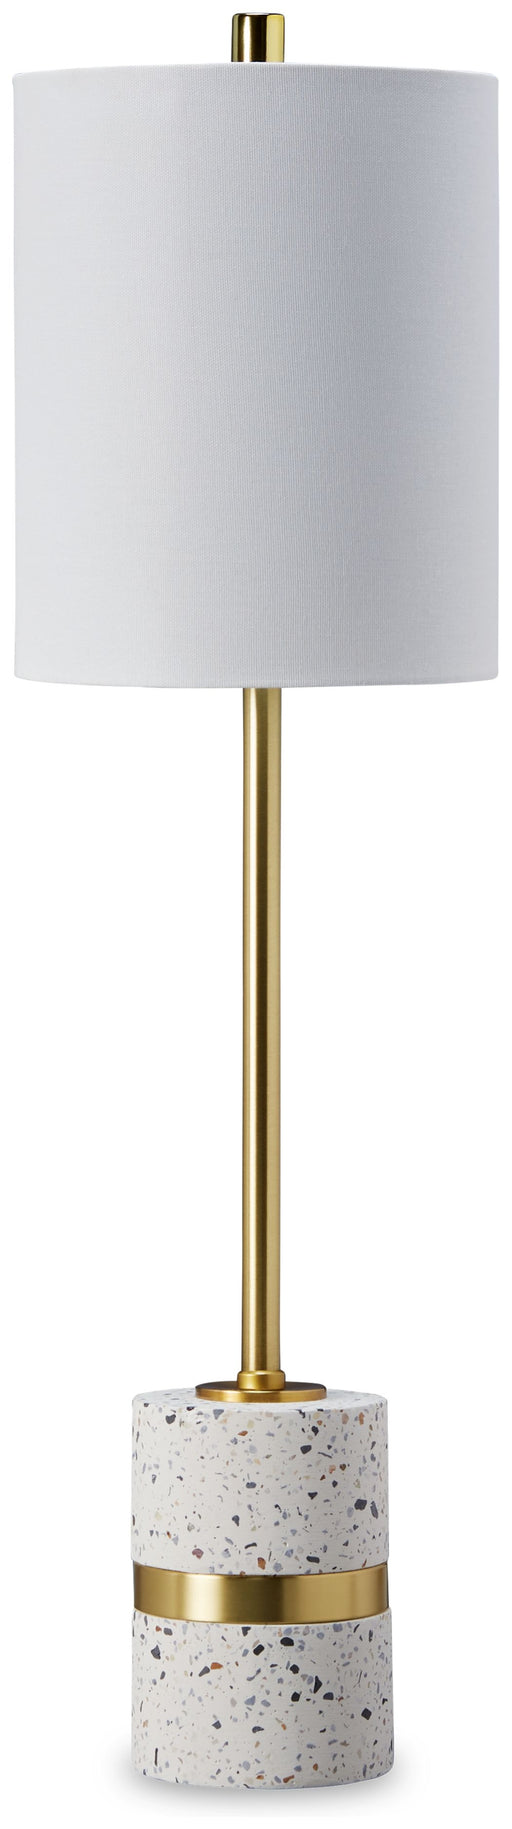 Maywick - White - Metal Table Lamp Capital Discount Furniture Home Furniture, Furniture Store